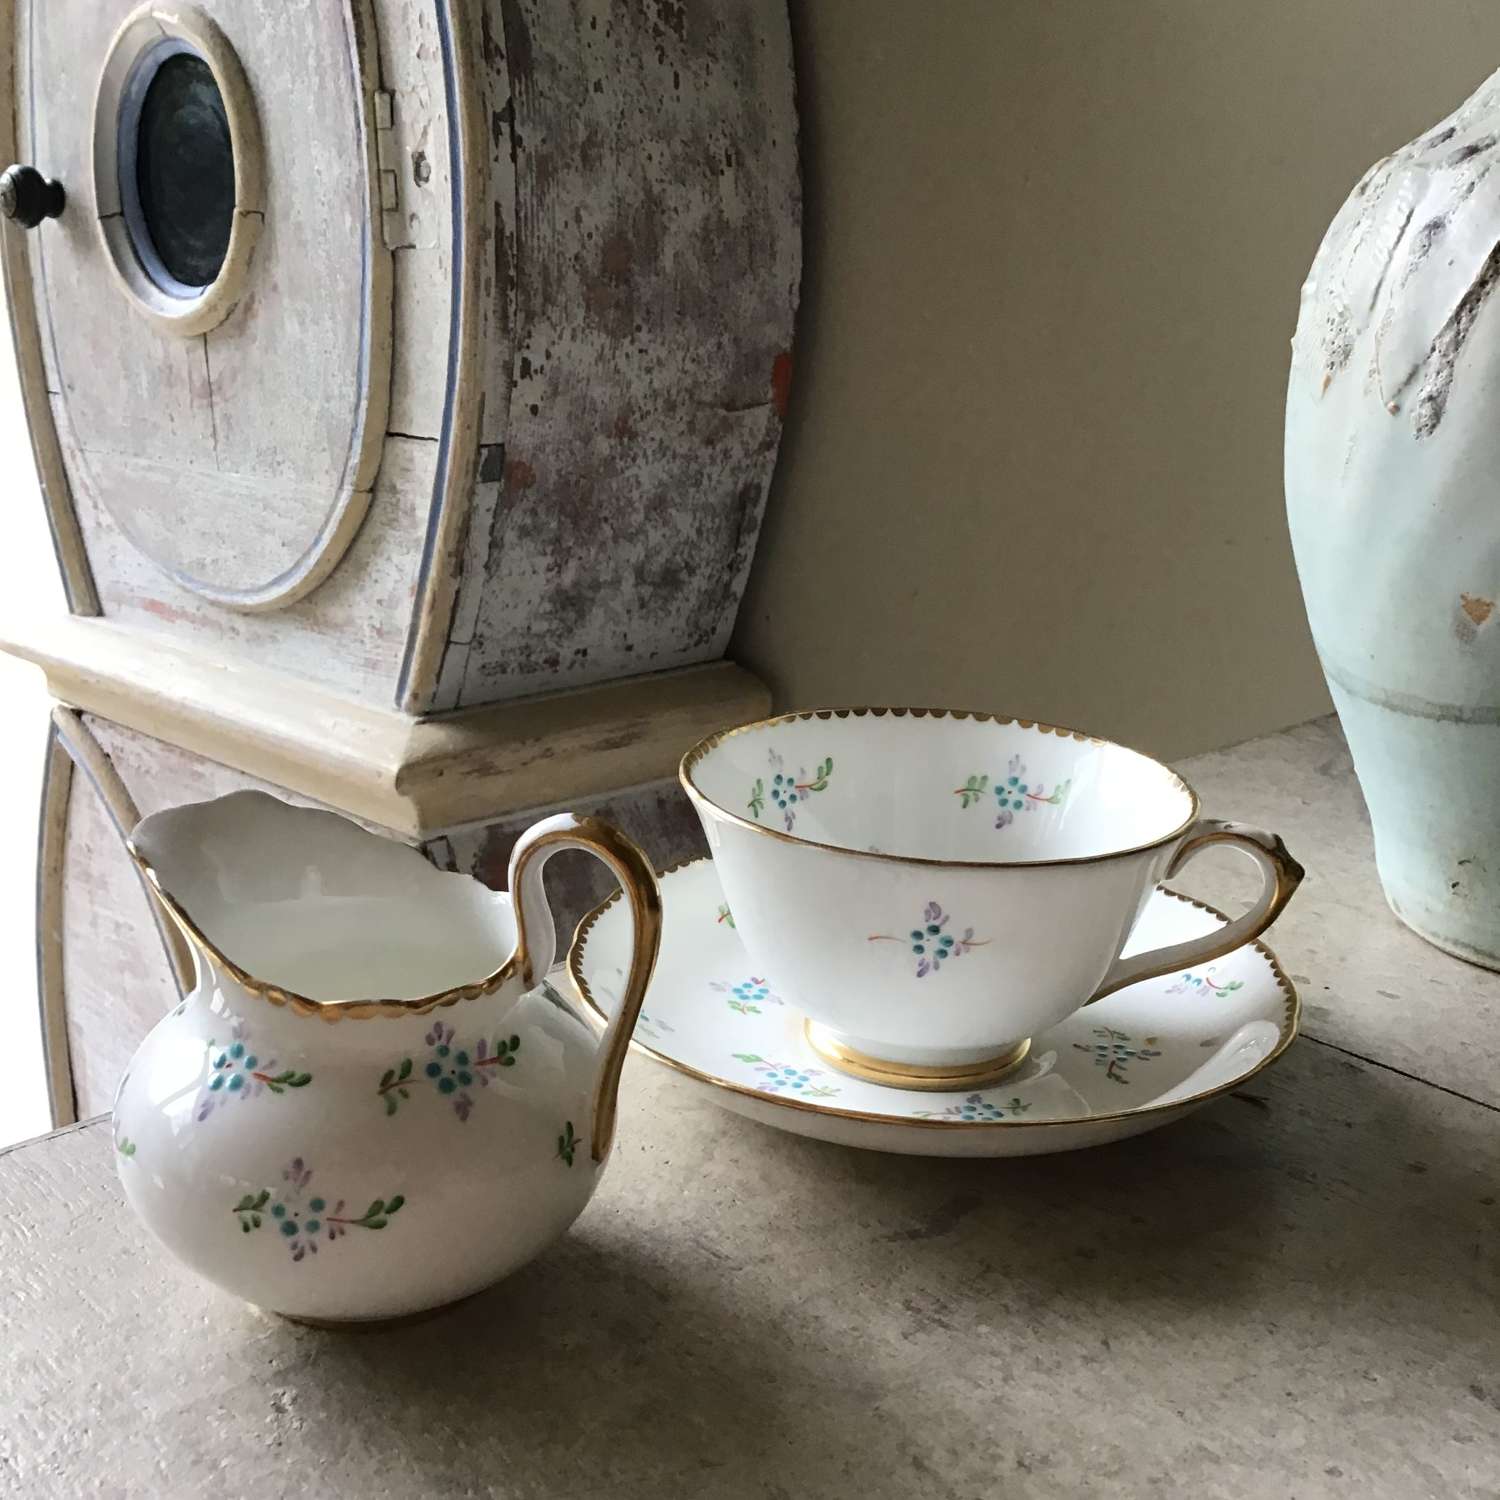 Vintage Tuscan bone china teacup, saucer and milk jug